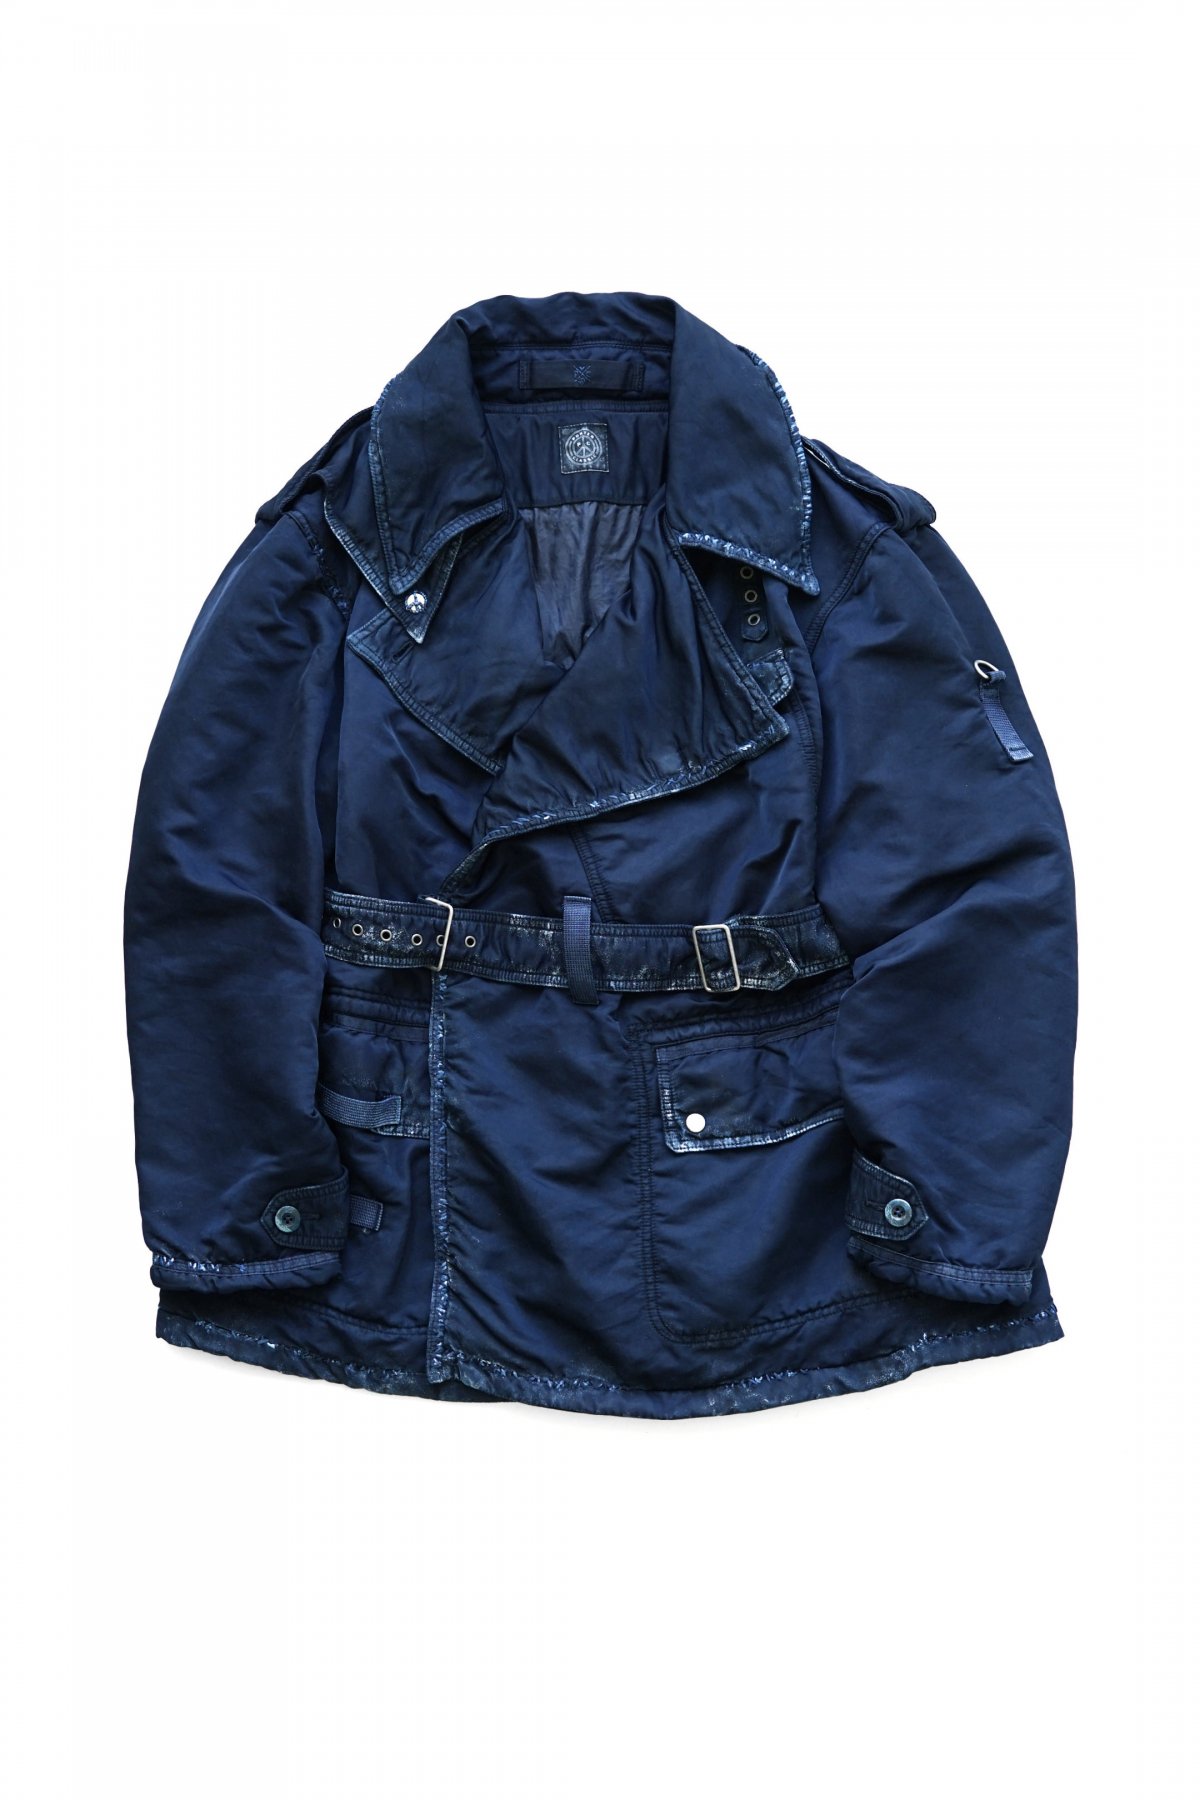 PORTER CLASSIC ポータークラシック PEELED CLOTH. MILITARY COAT ミリタリーコート ジャケット ブルー サイズ3 正規品 / 32438約65cm袖丈